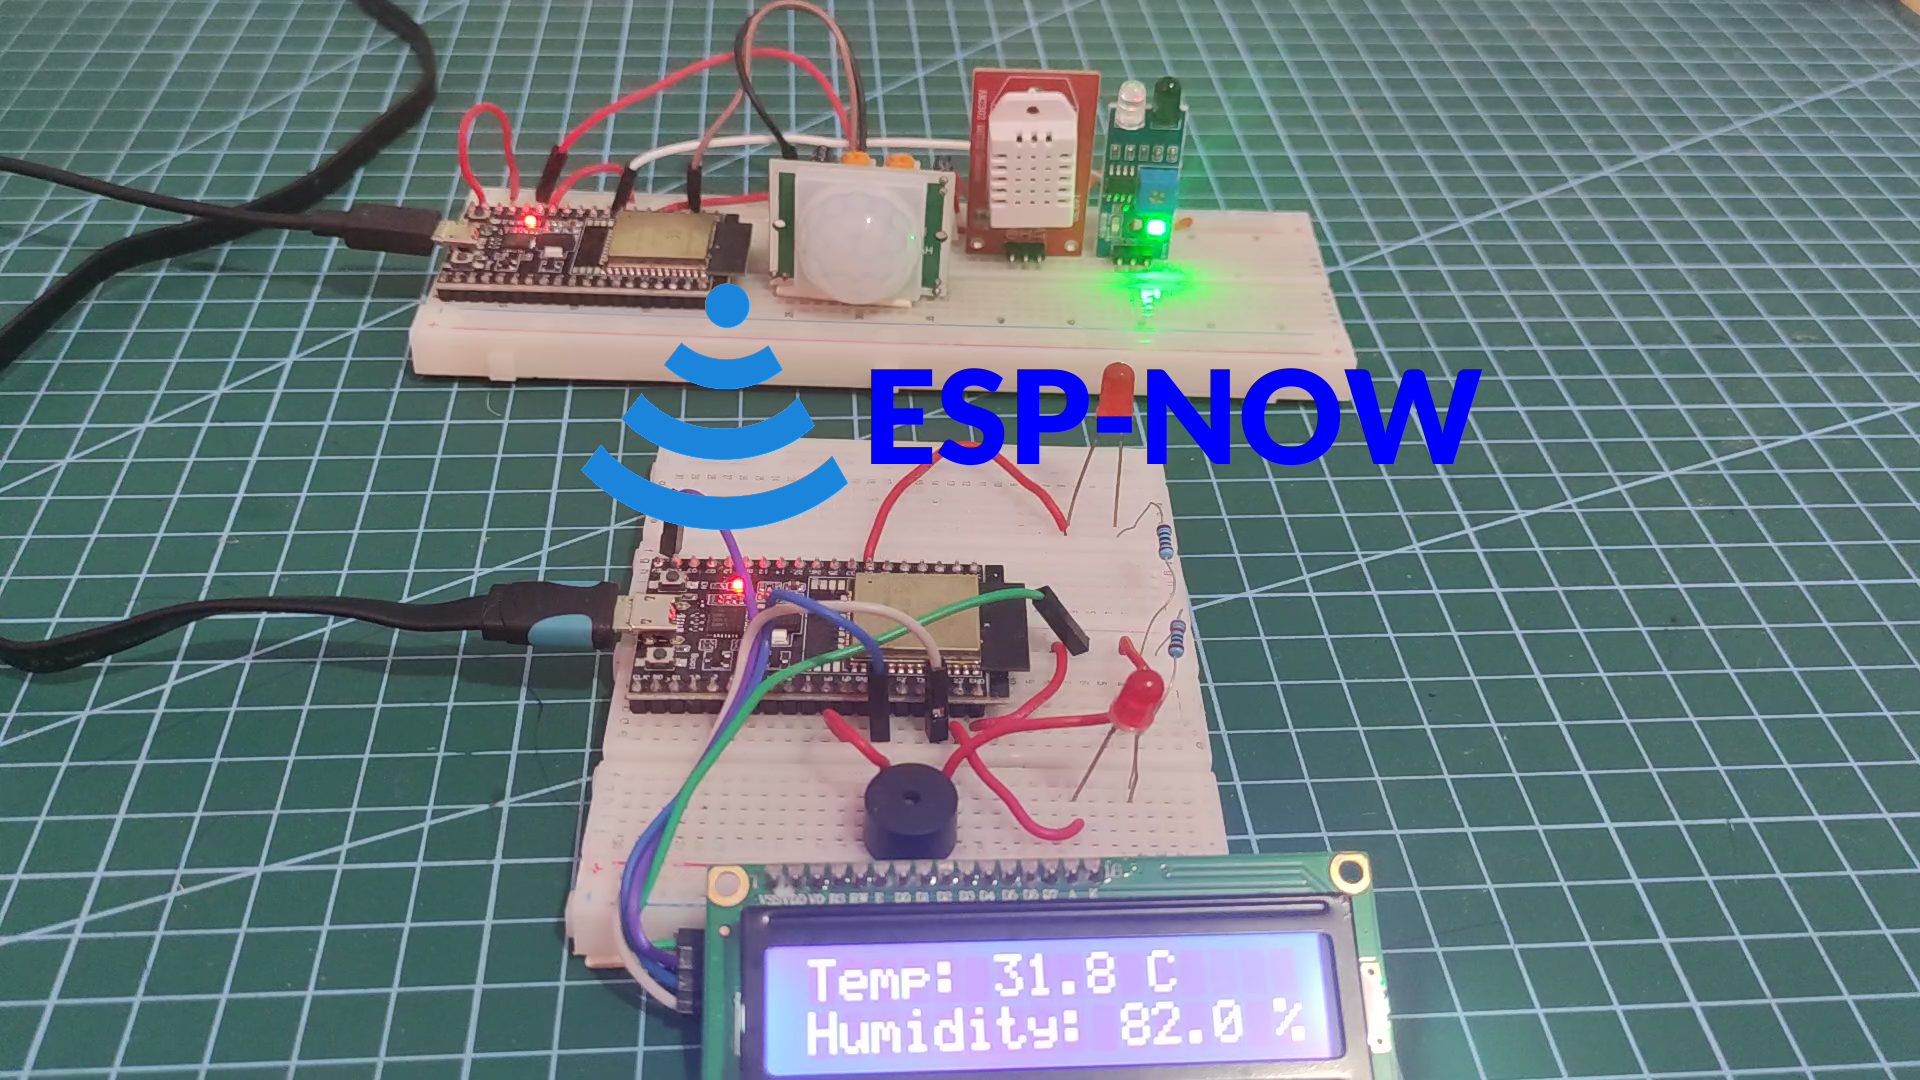 Sensors sending data through ESP-NOW in MicroPython